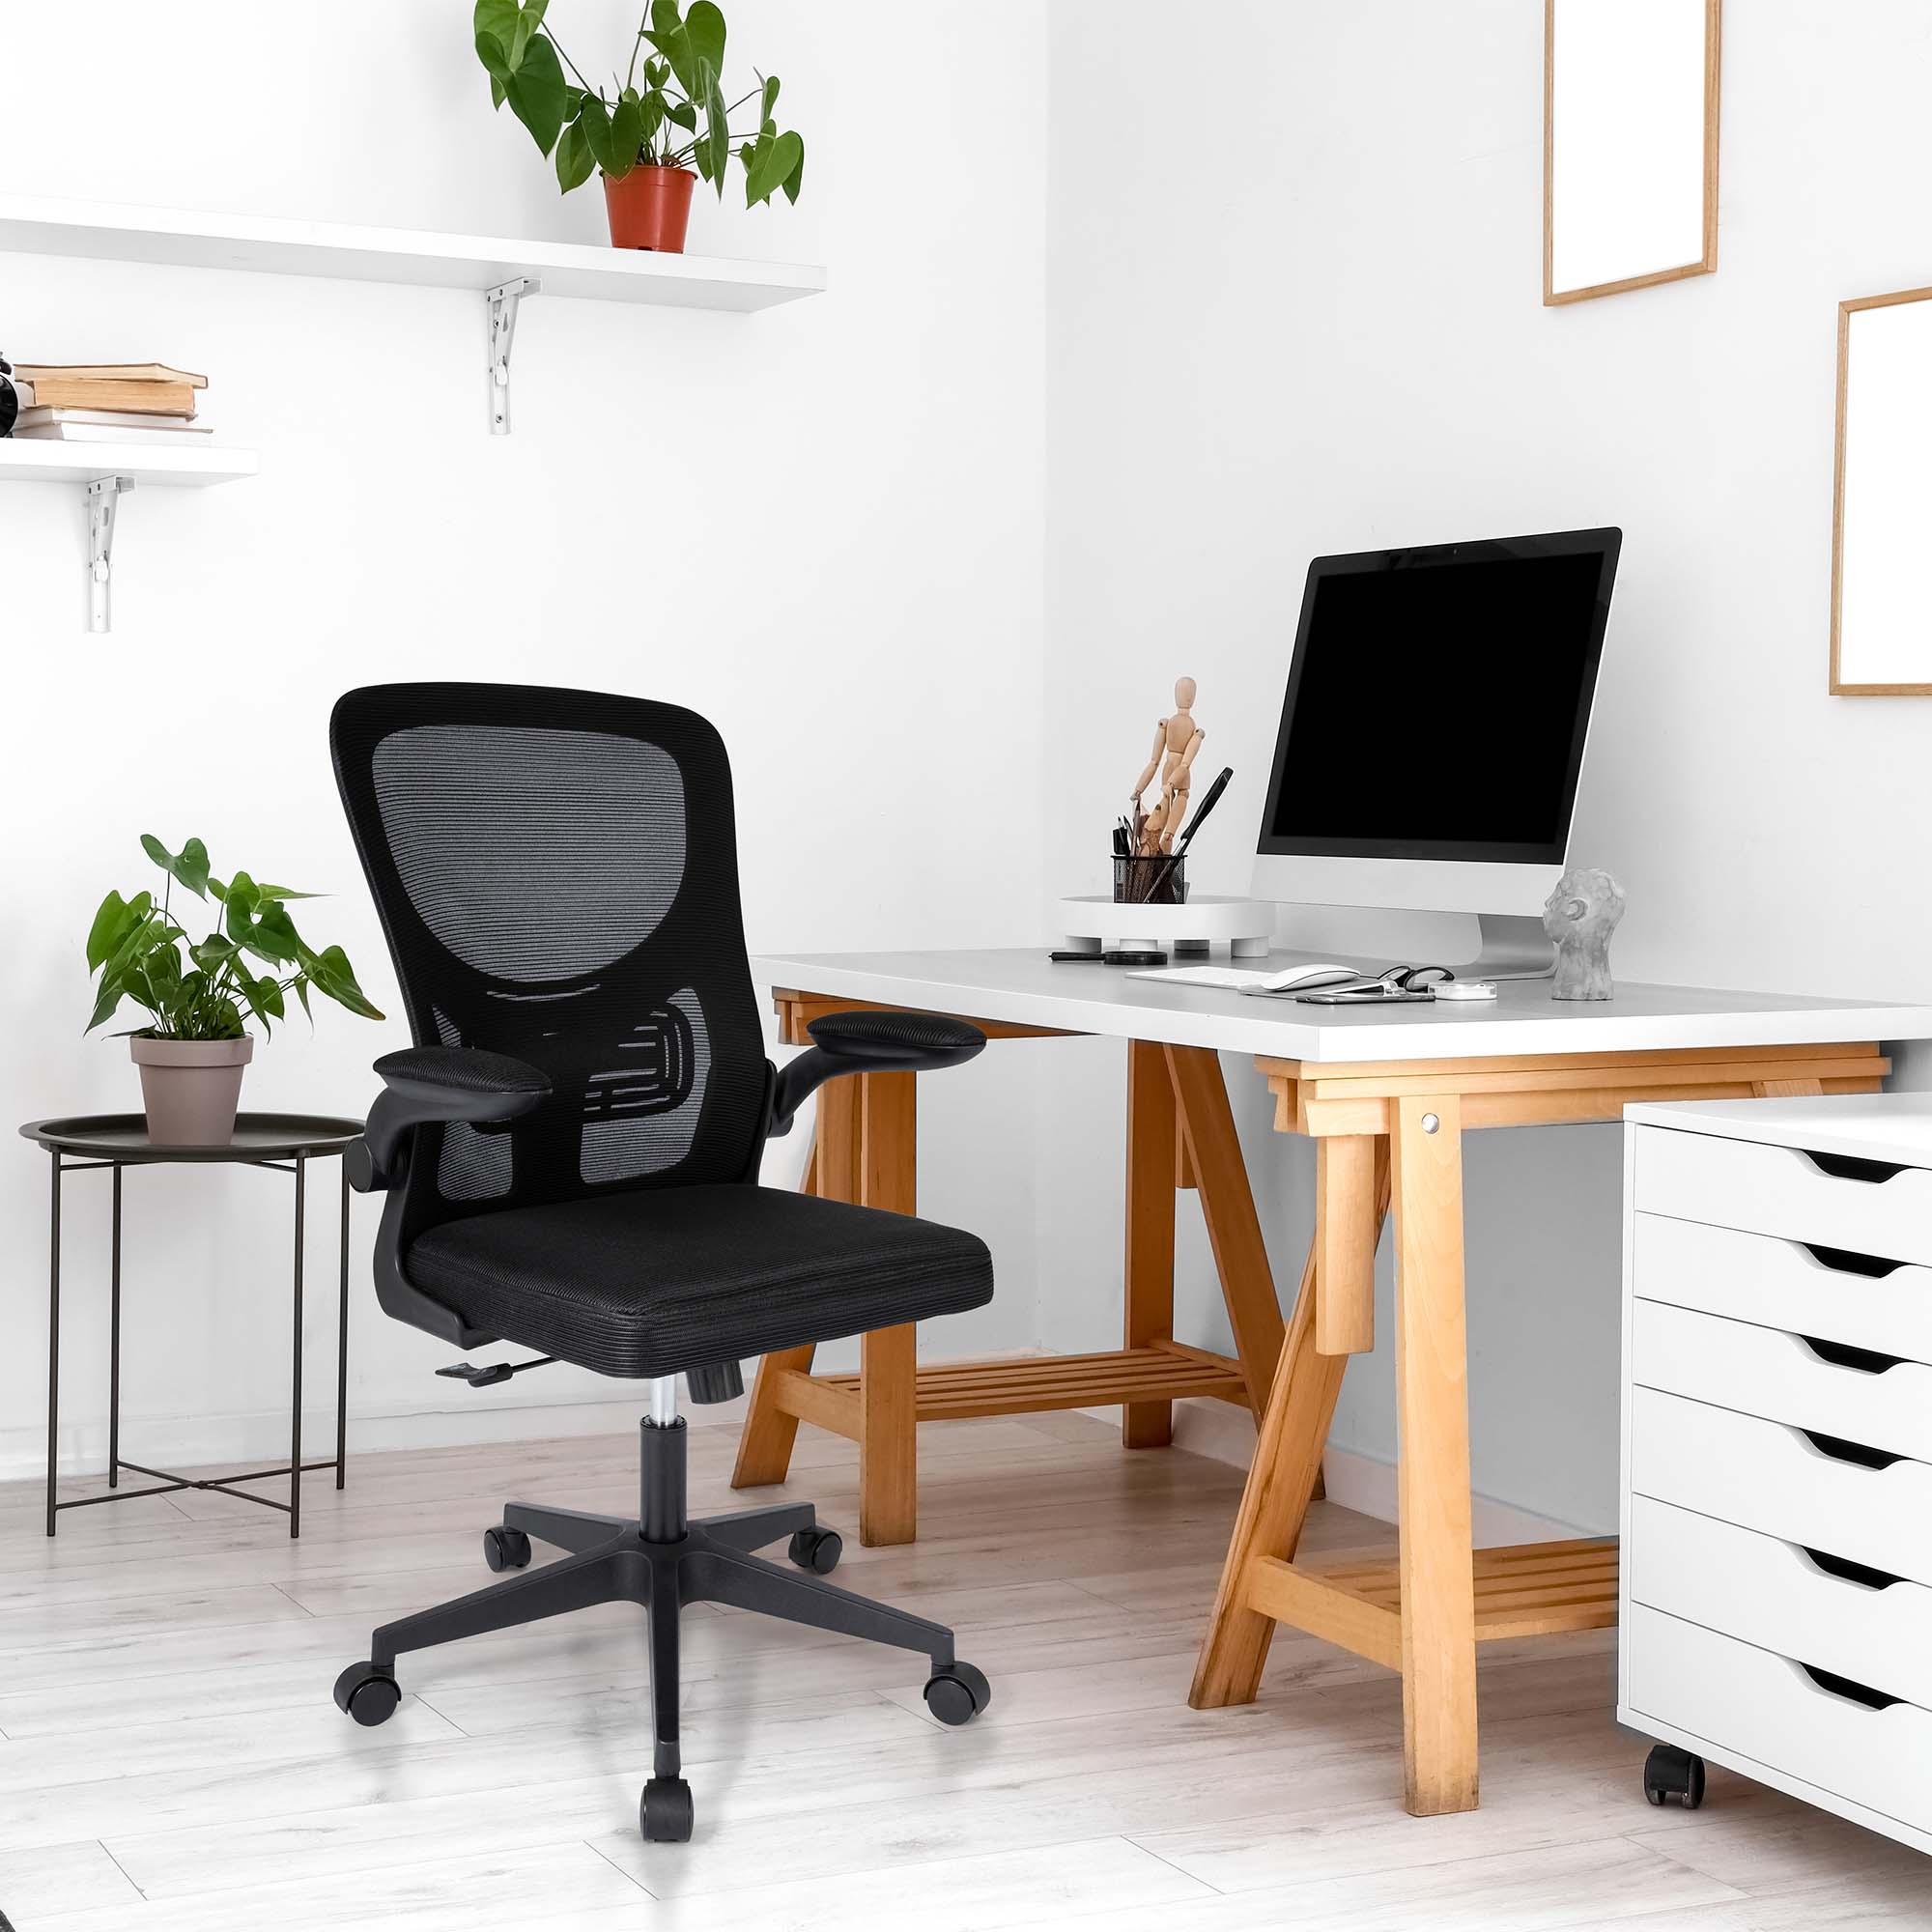 Ergodu Ergonomic Office Chair with Foldable Armrests mood photo